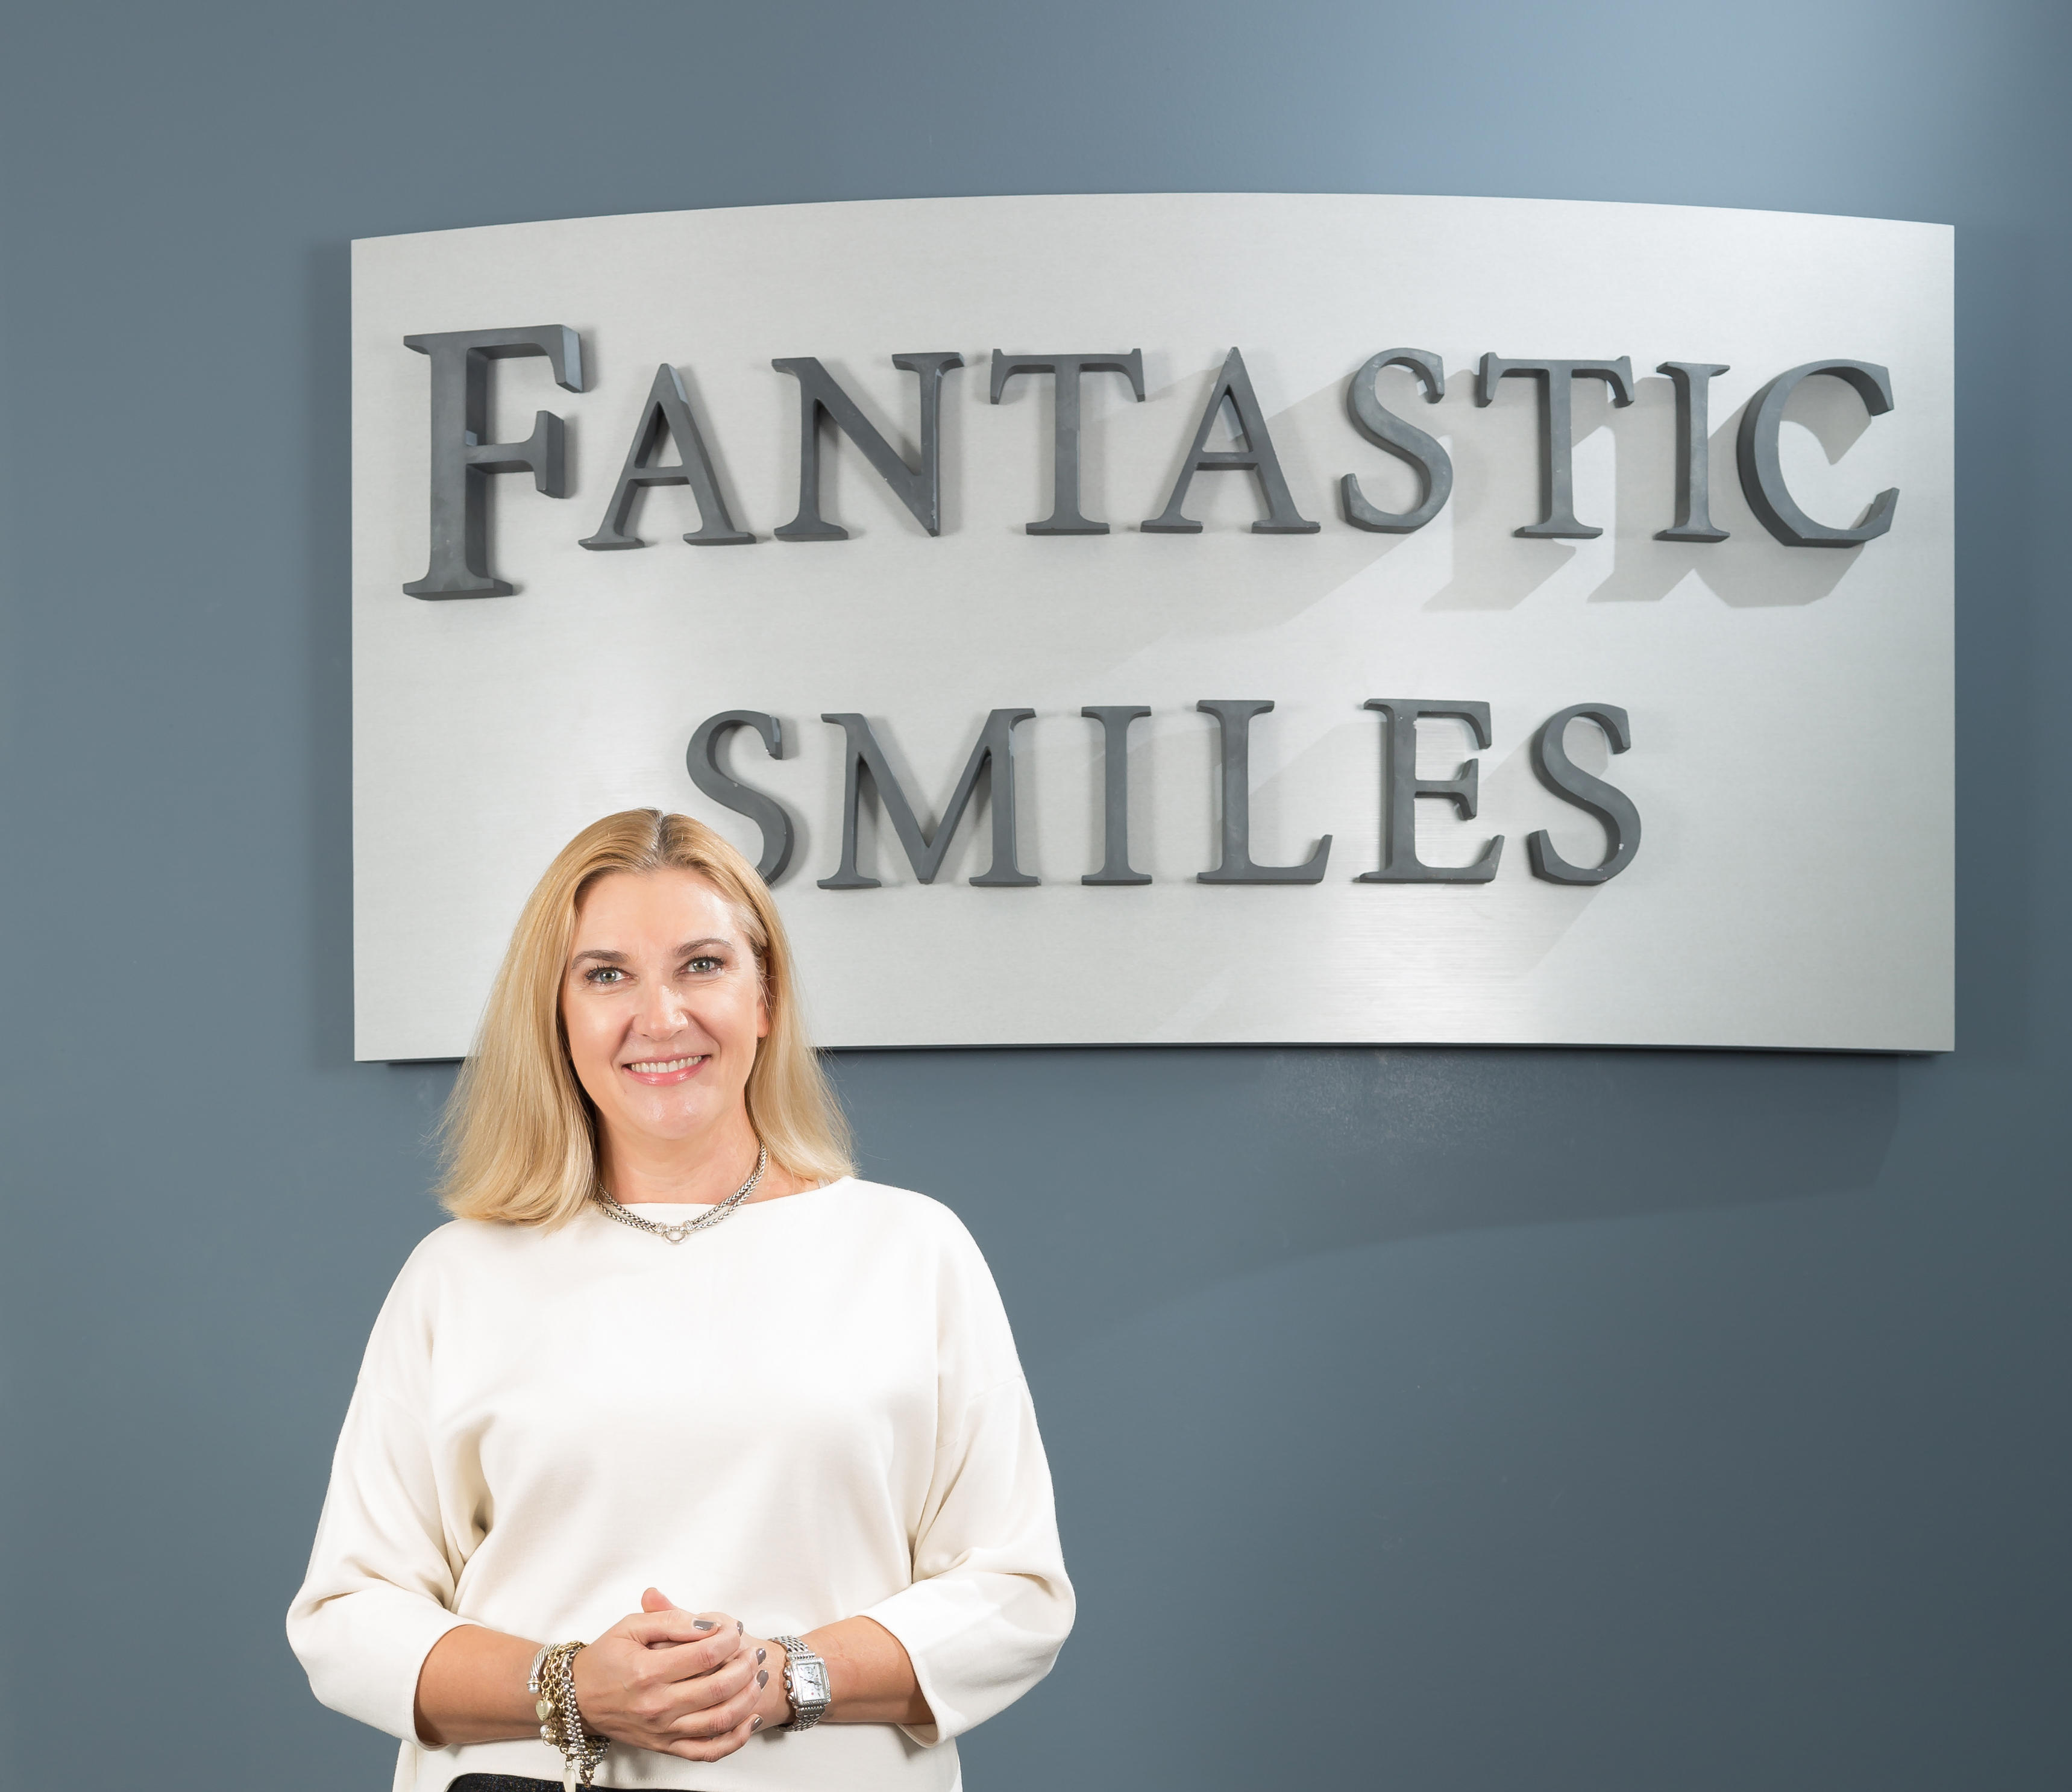 Fantastic Smiles Ltd Photo